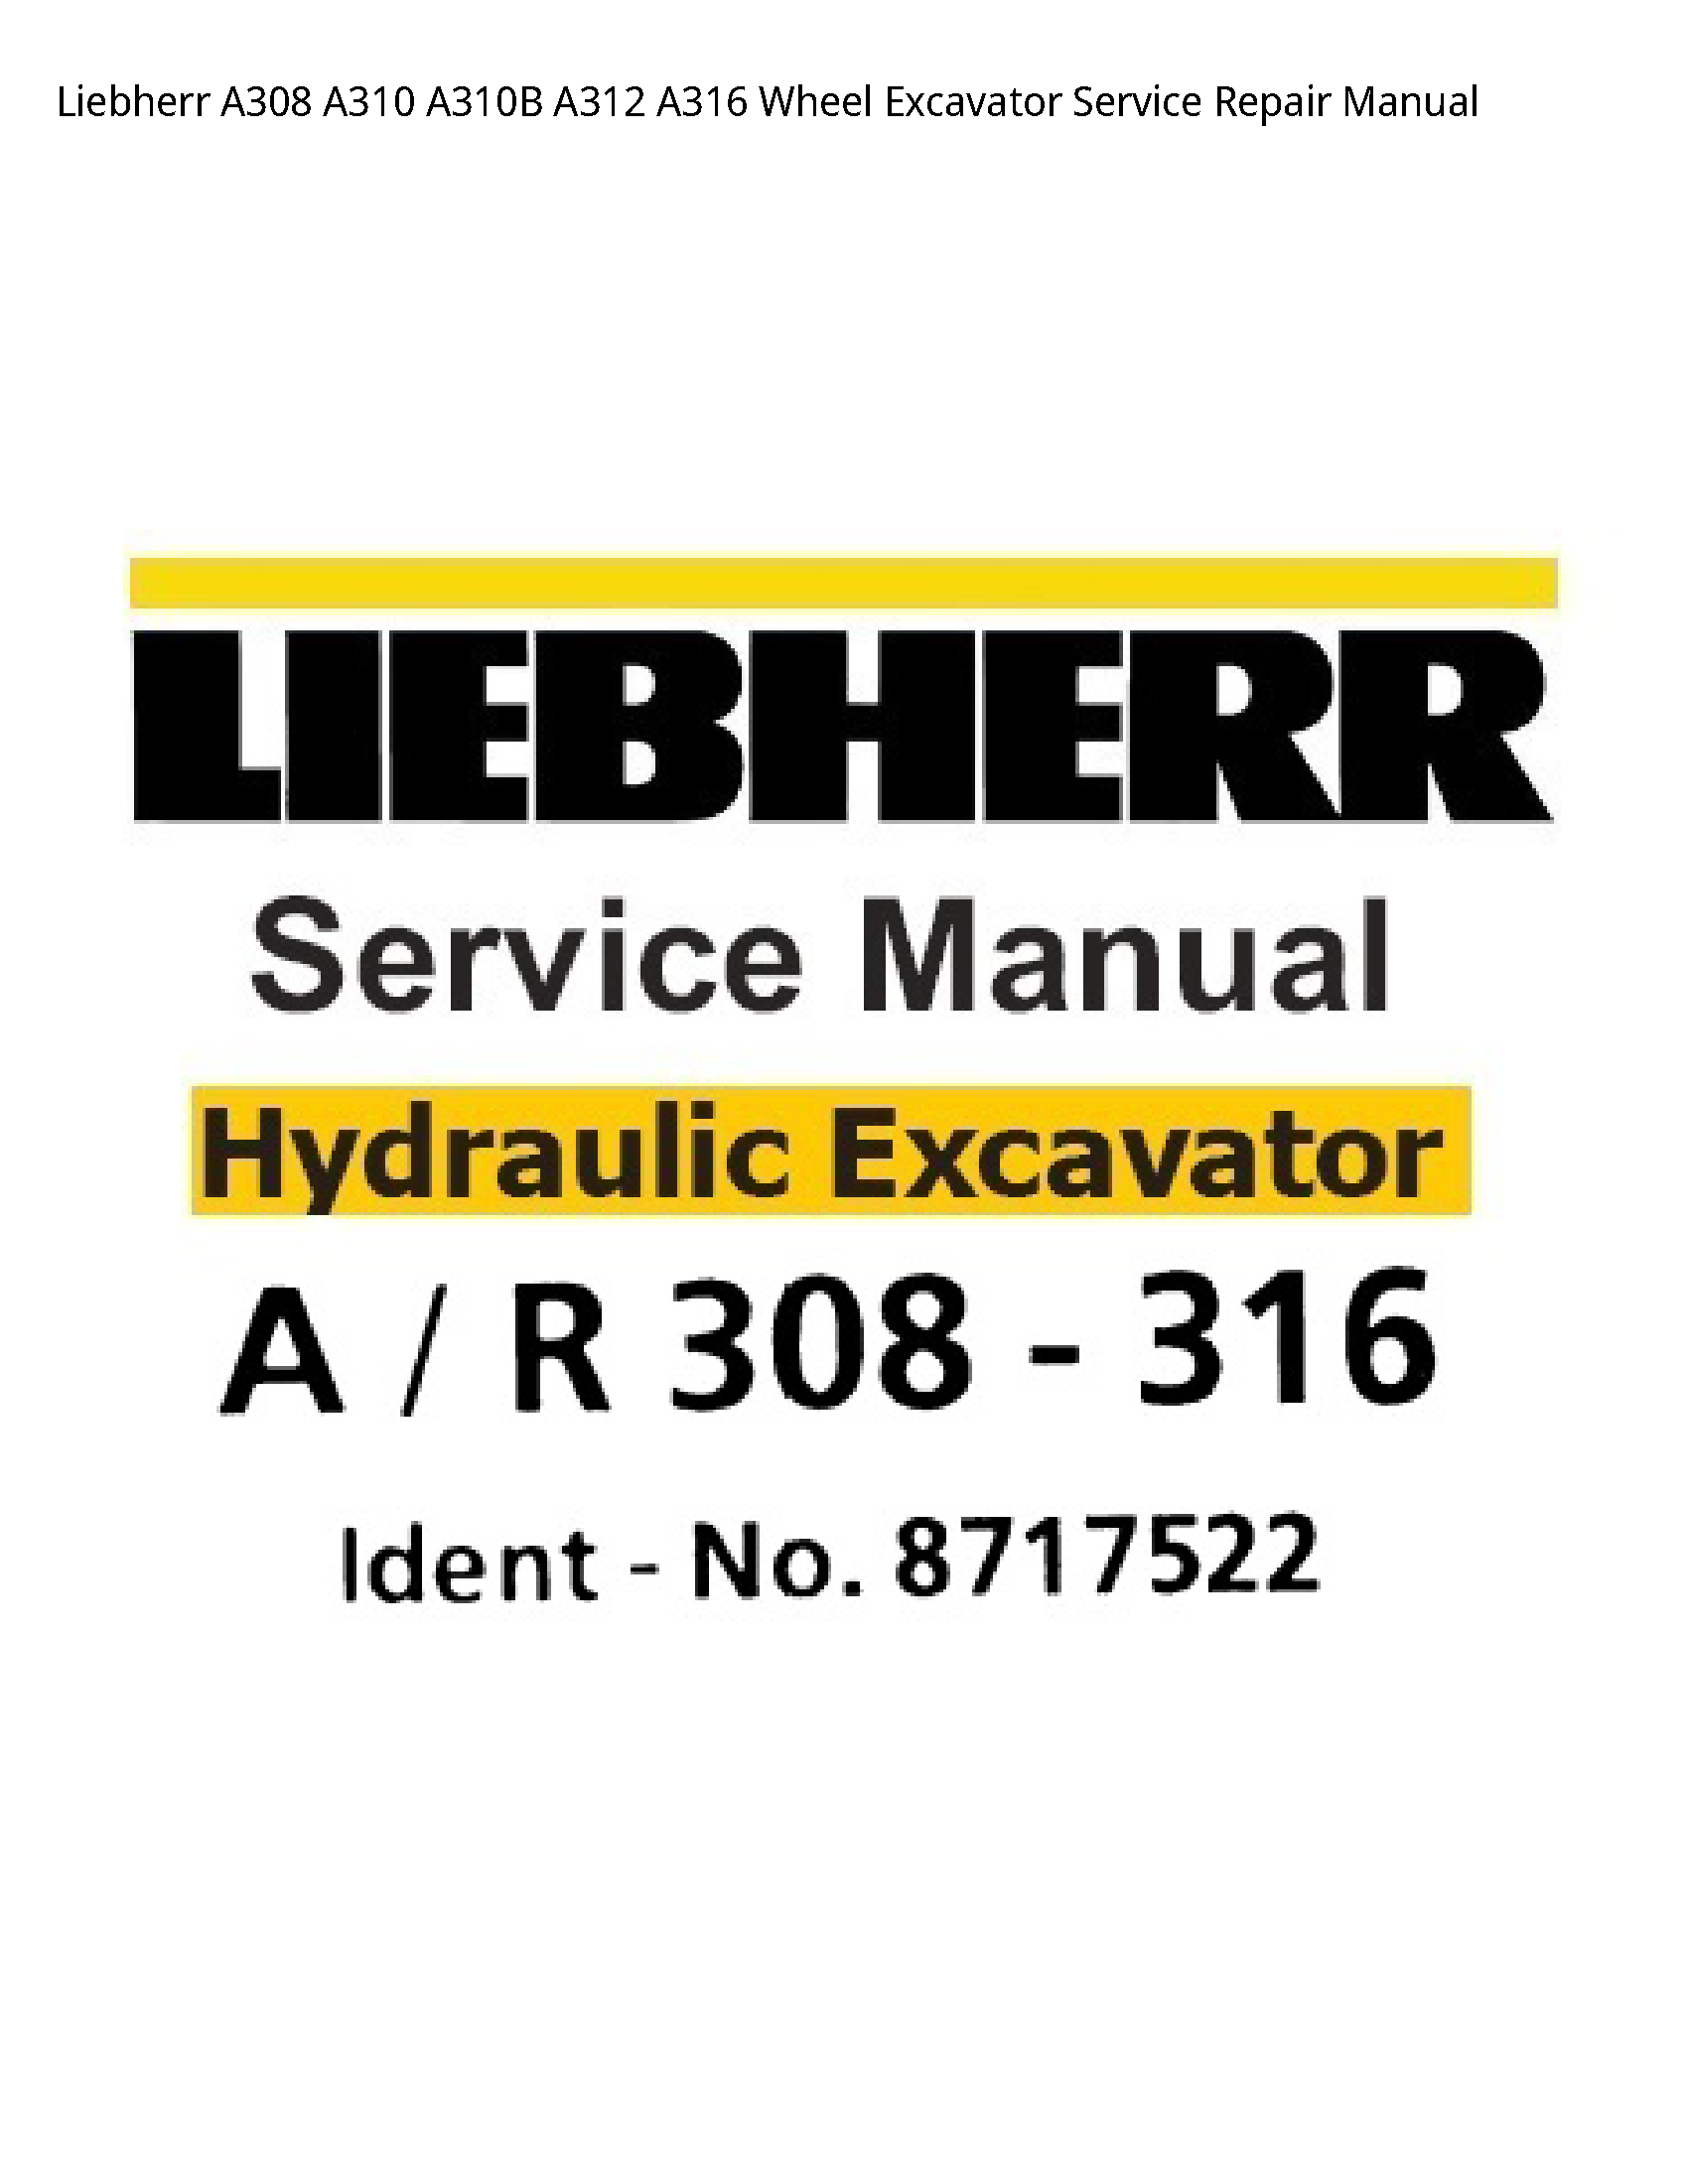 Liebherr A308 Wheel Excavator manual